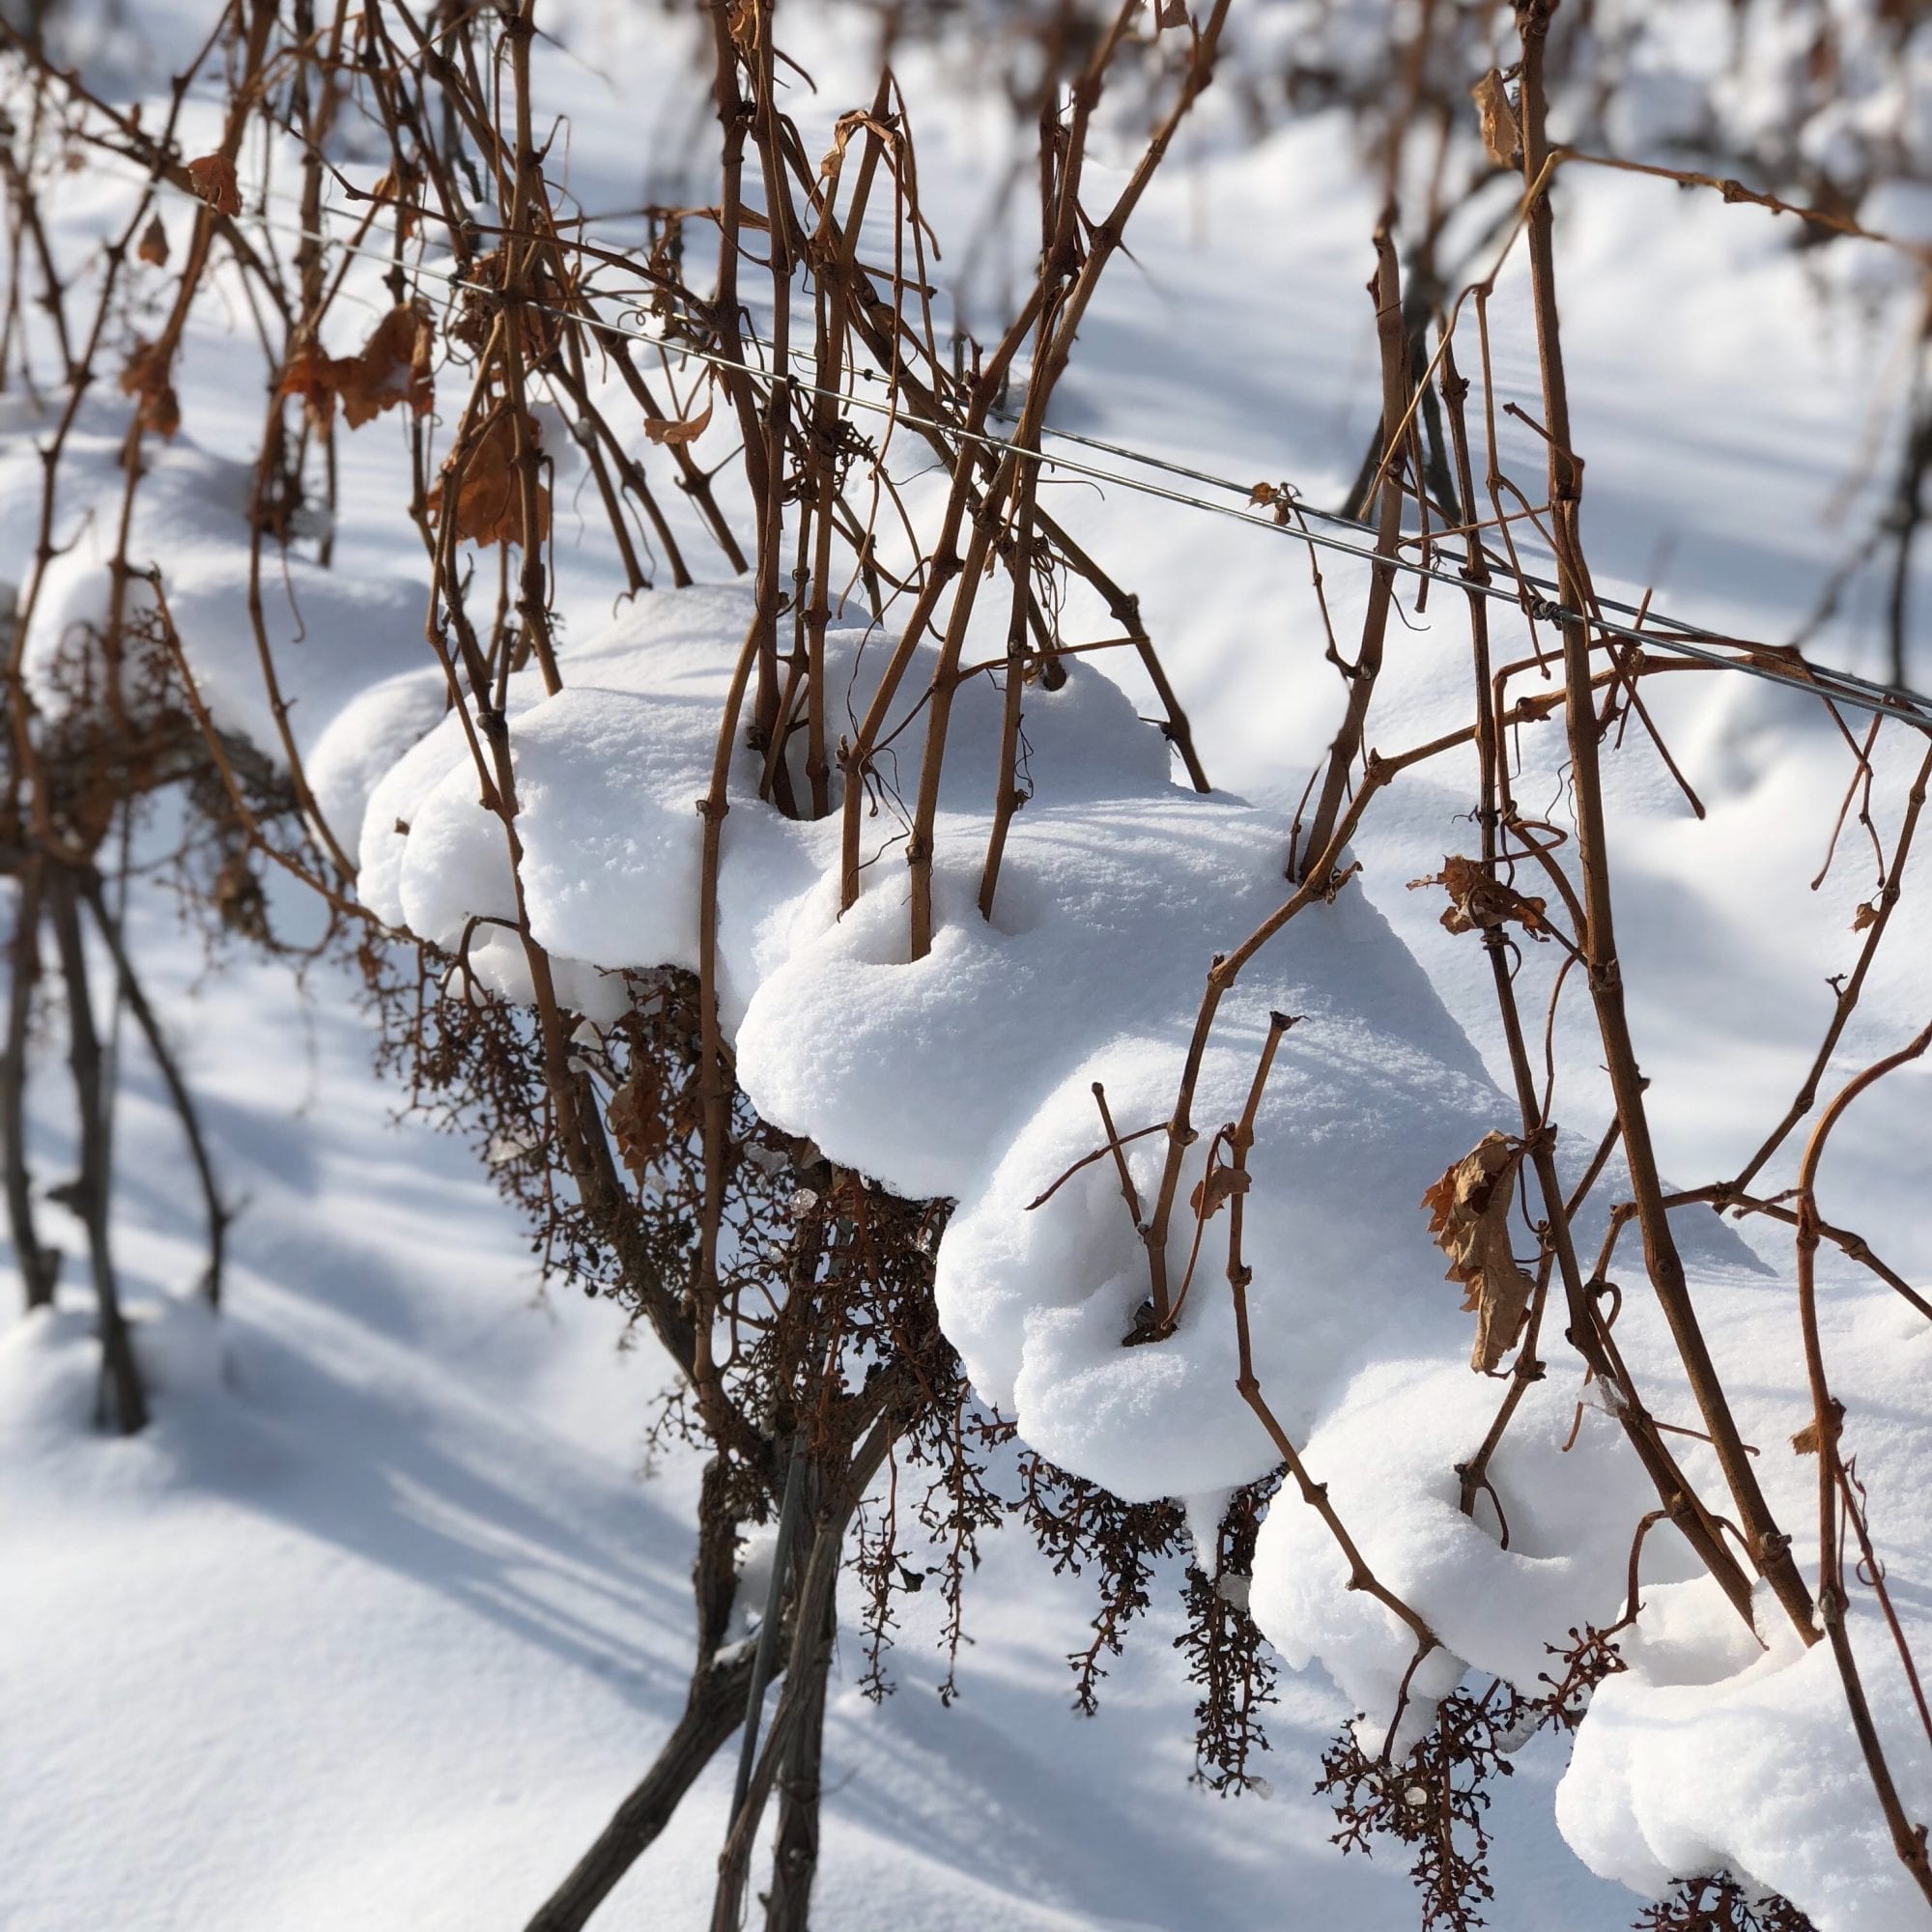 M-Cellars-Vineyard-Winter-Snowfall